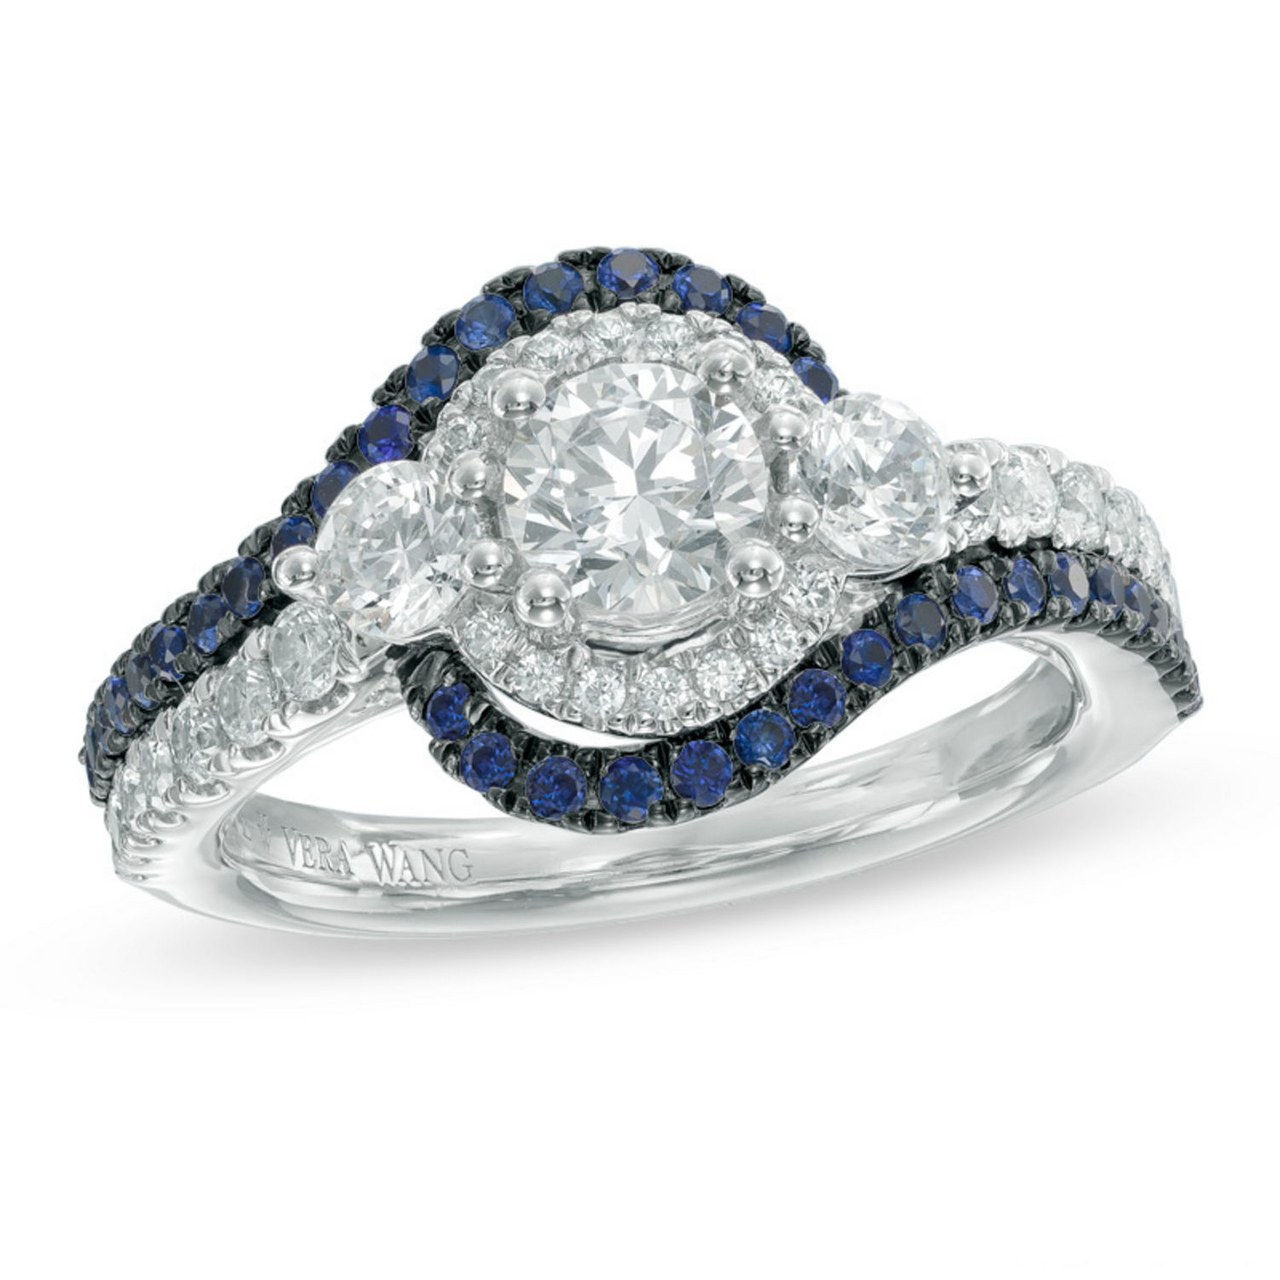 3b sapphire engagement rings 1026 courtesy vera wang love